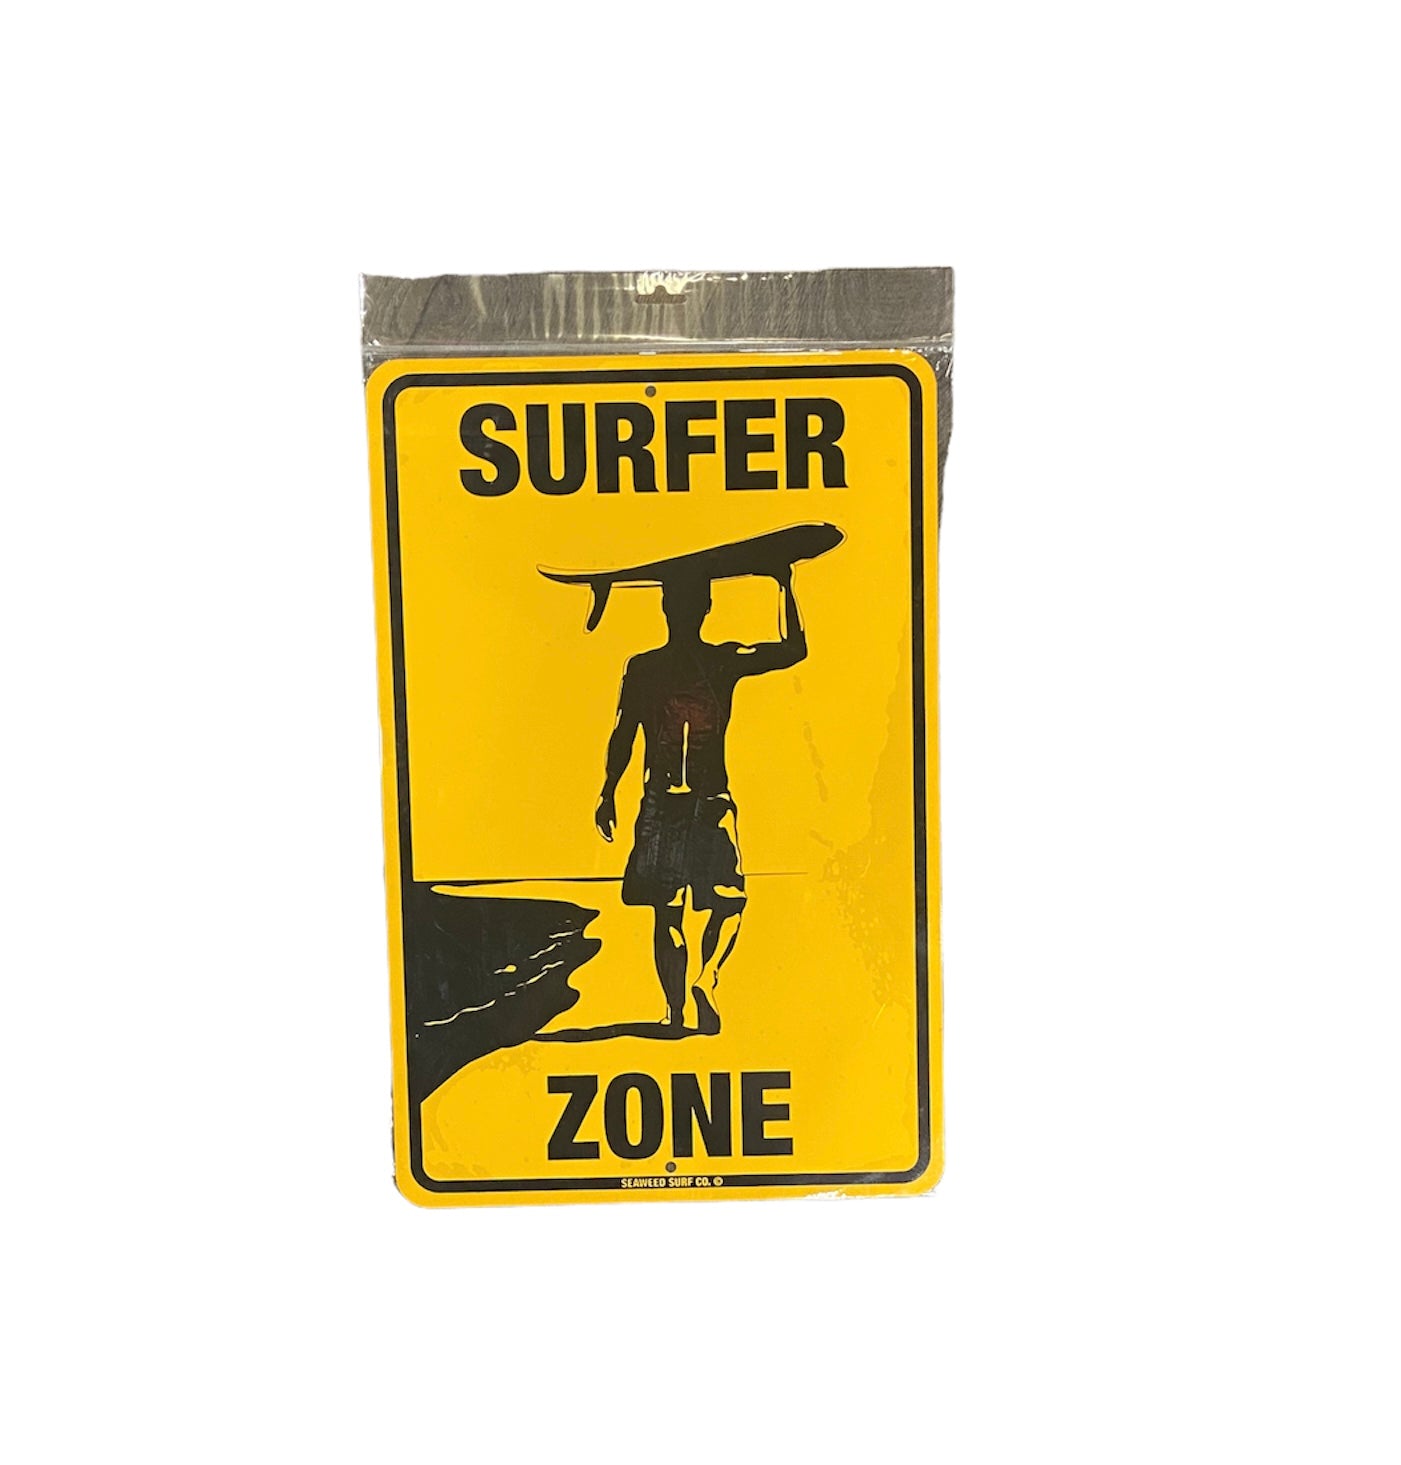 Surfer Crossing Metal Street Sign Sign